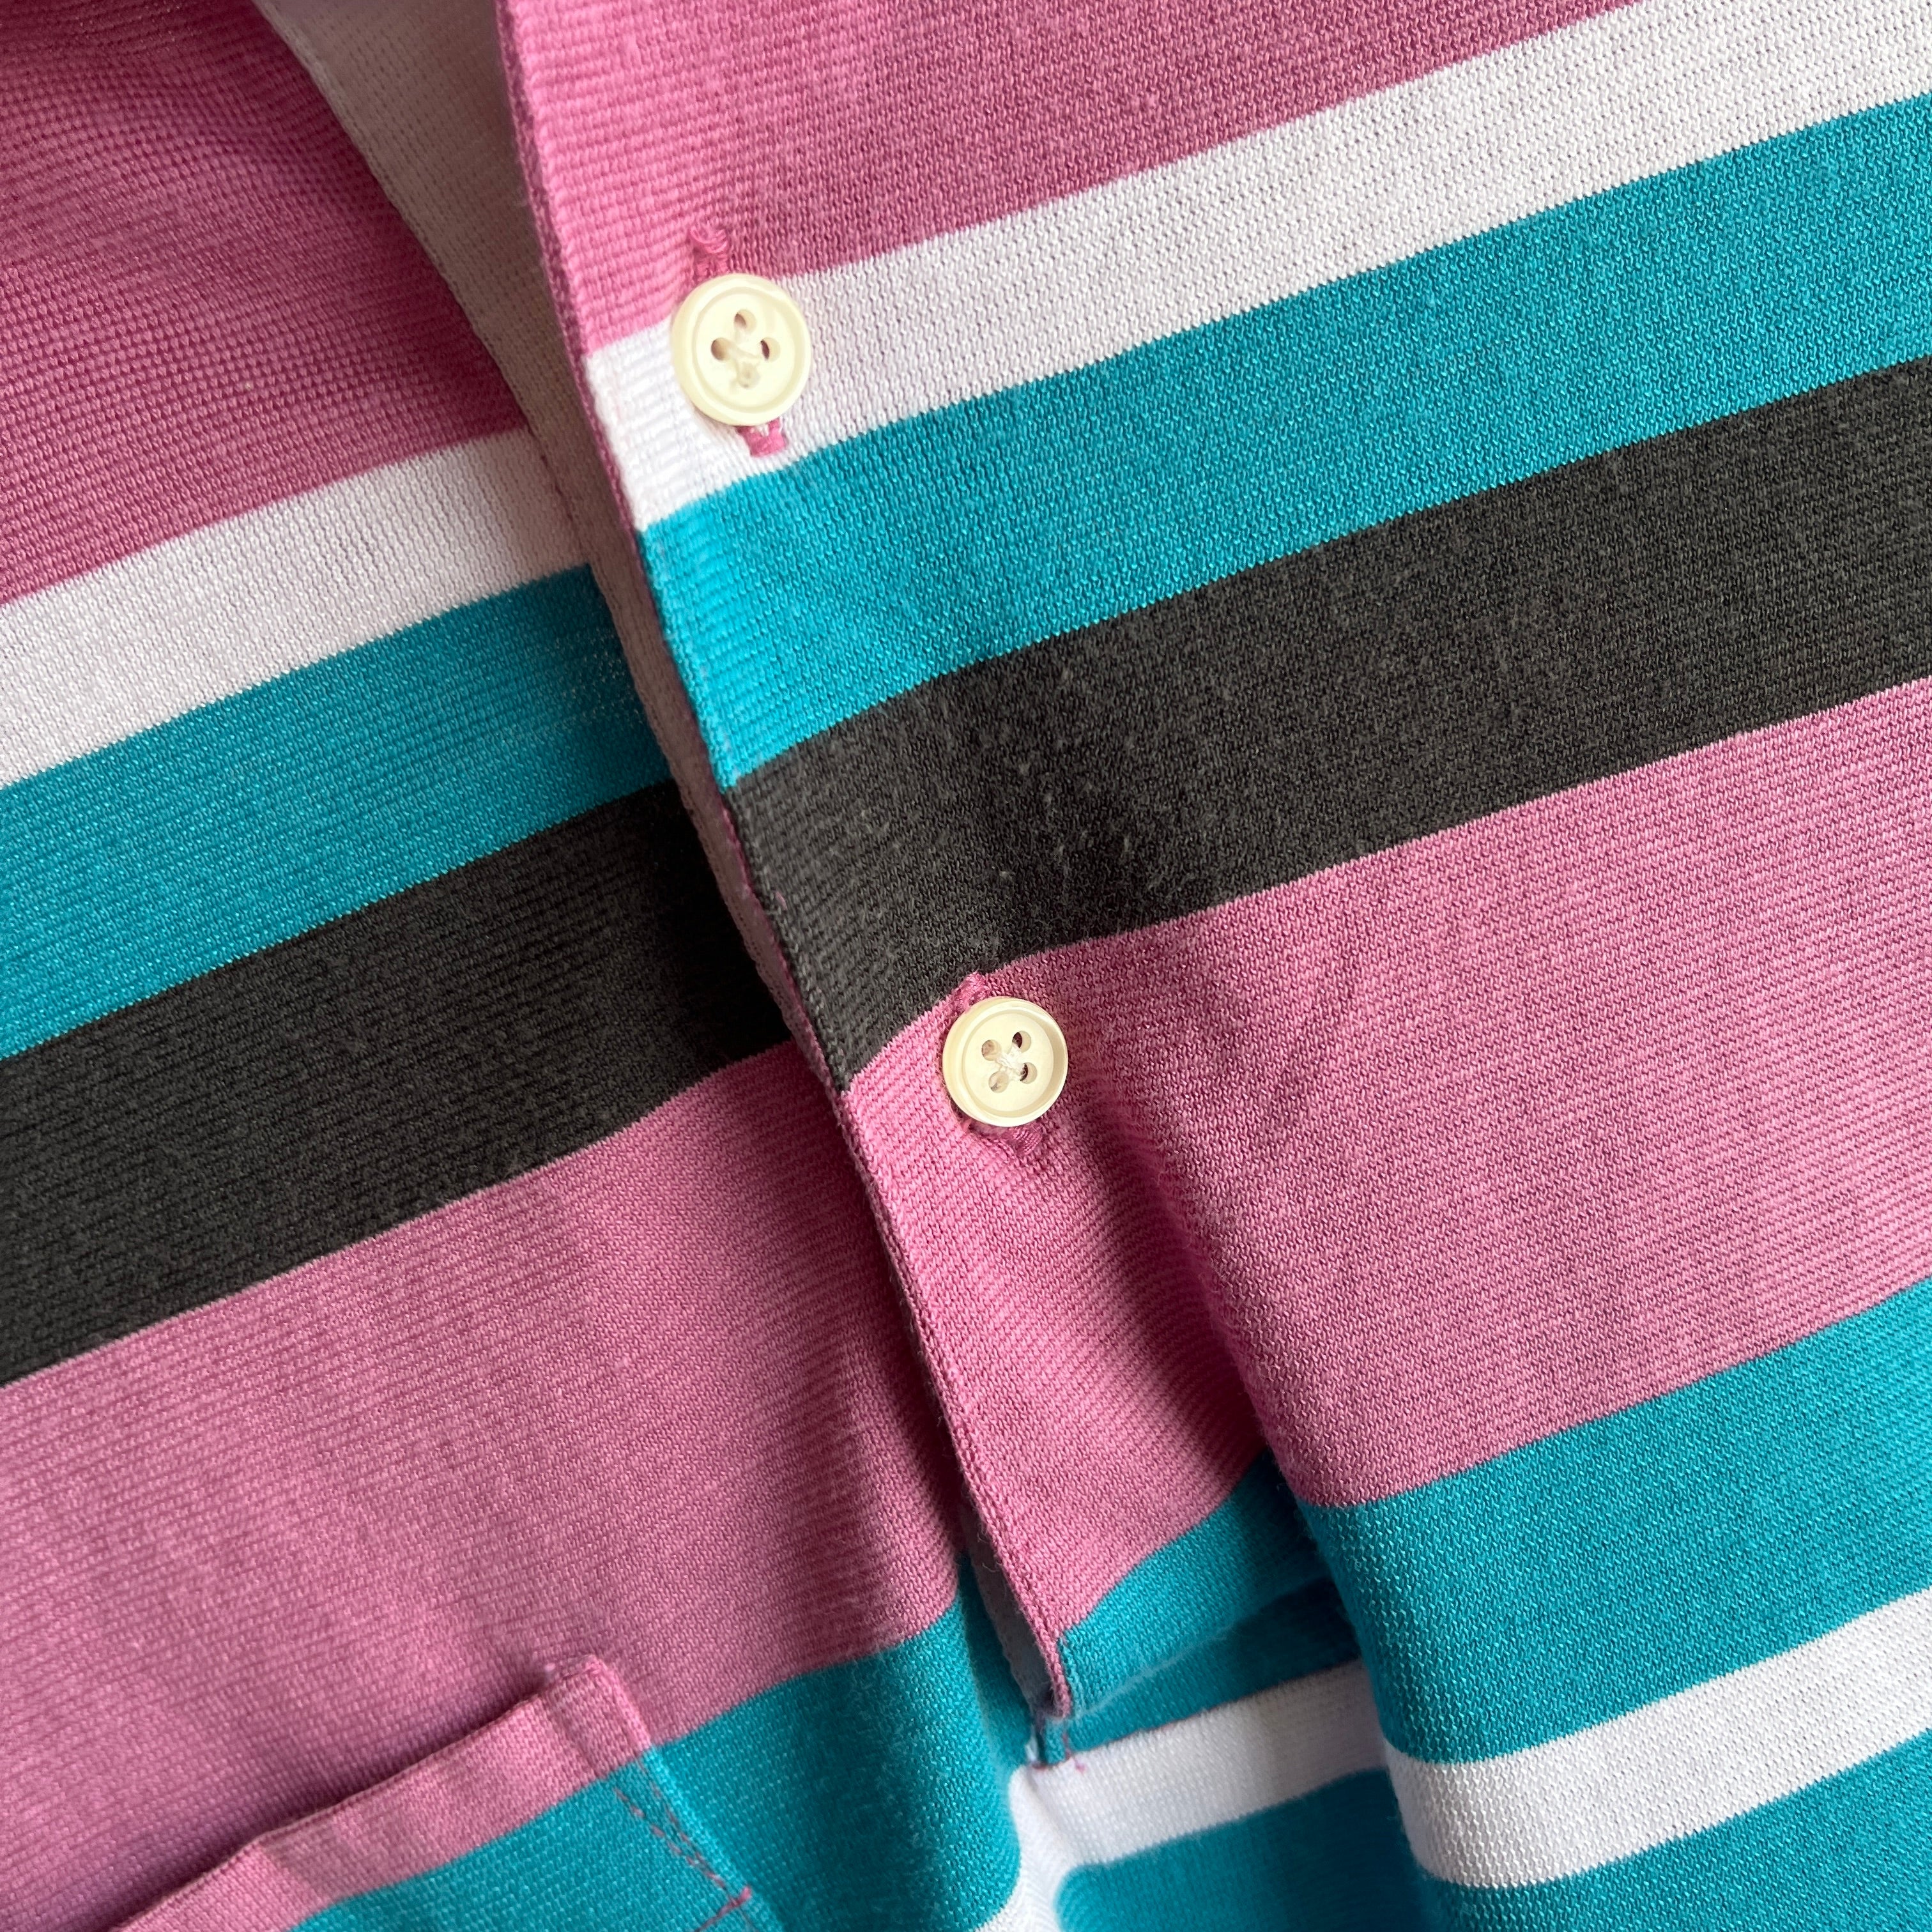 1980s Striped Polo Pocket Shirt